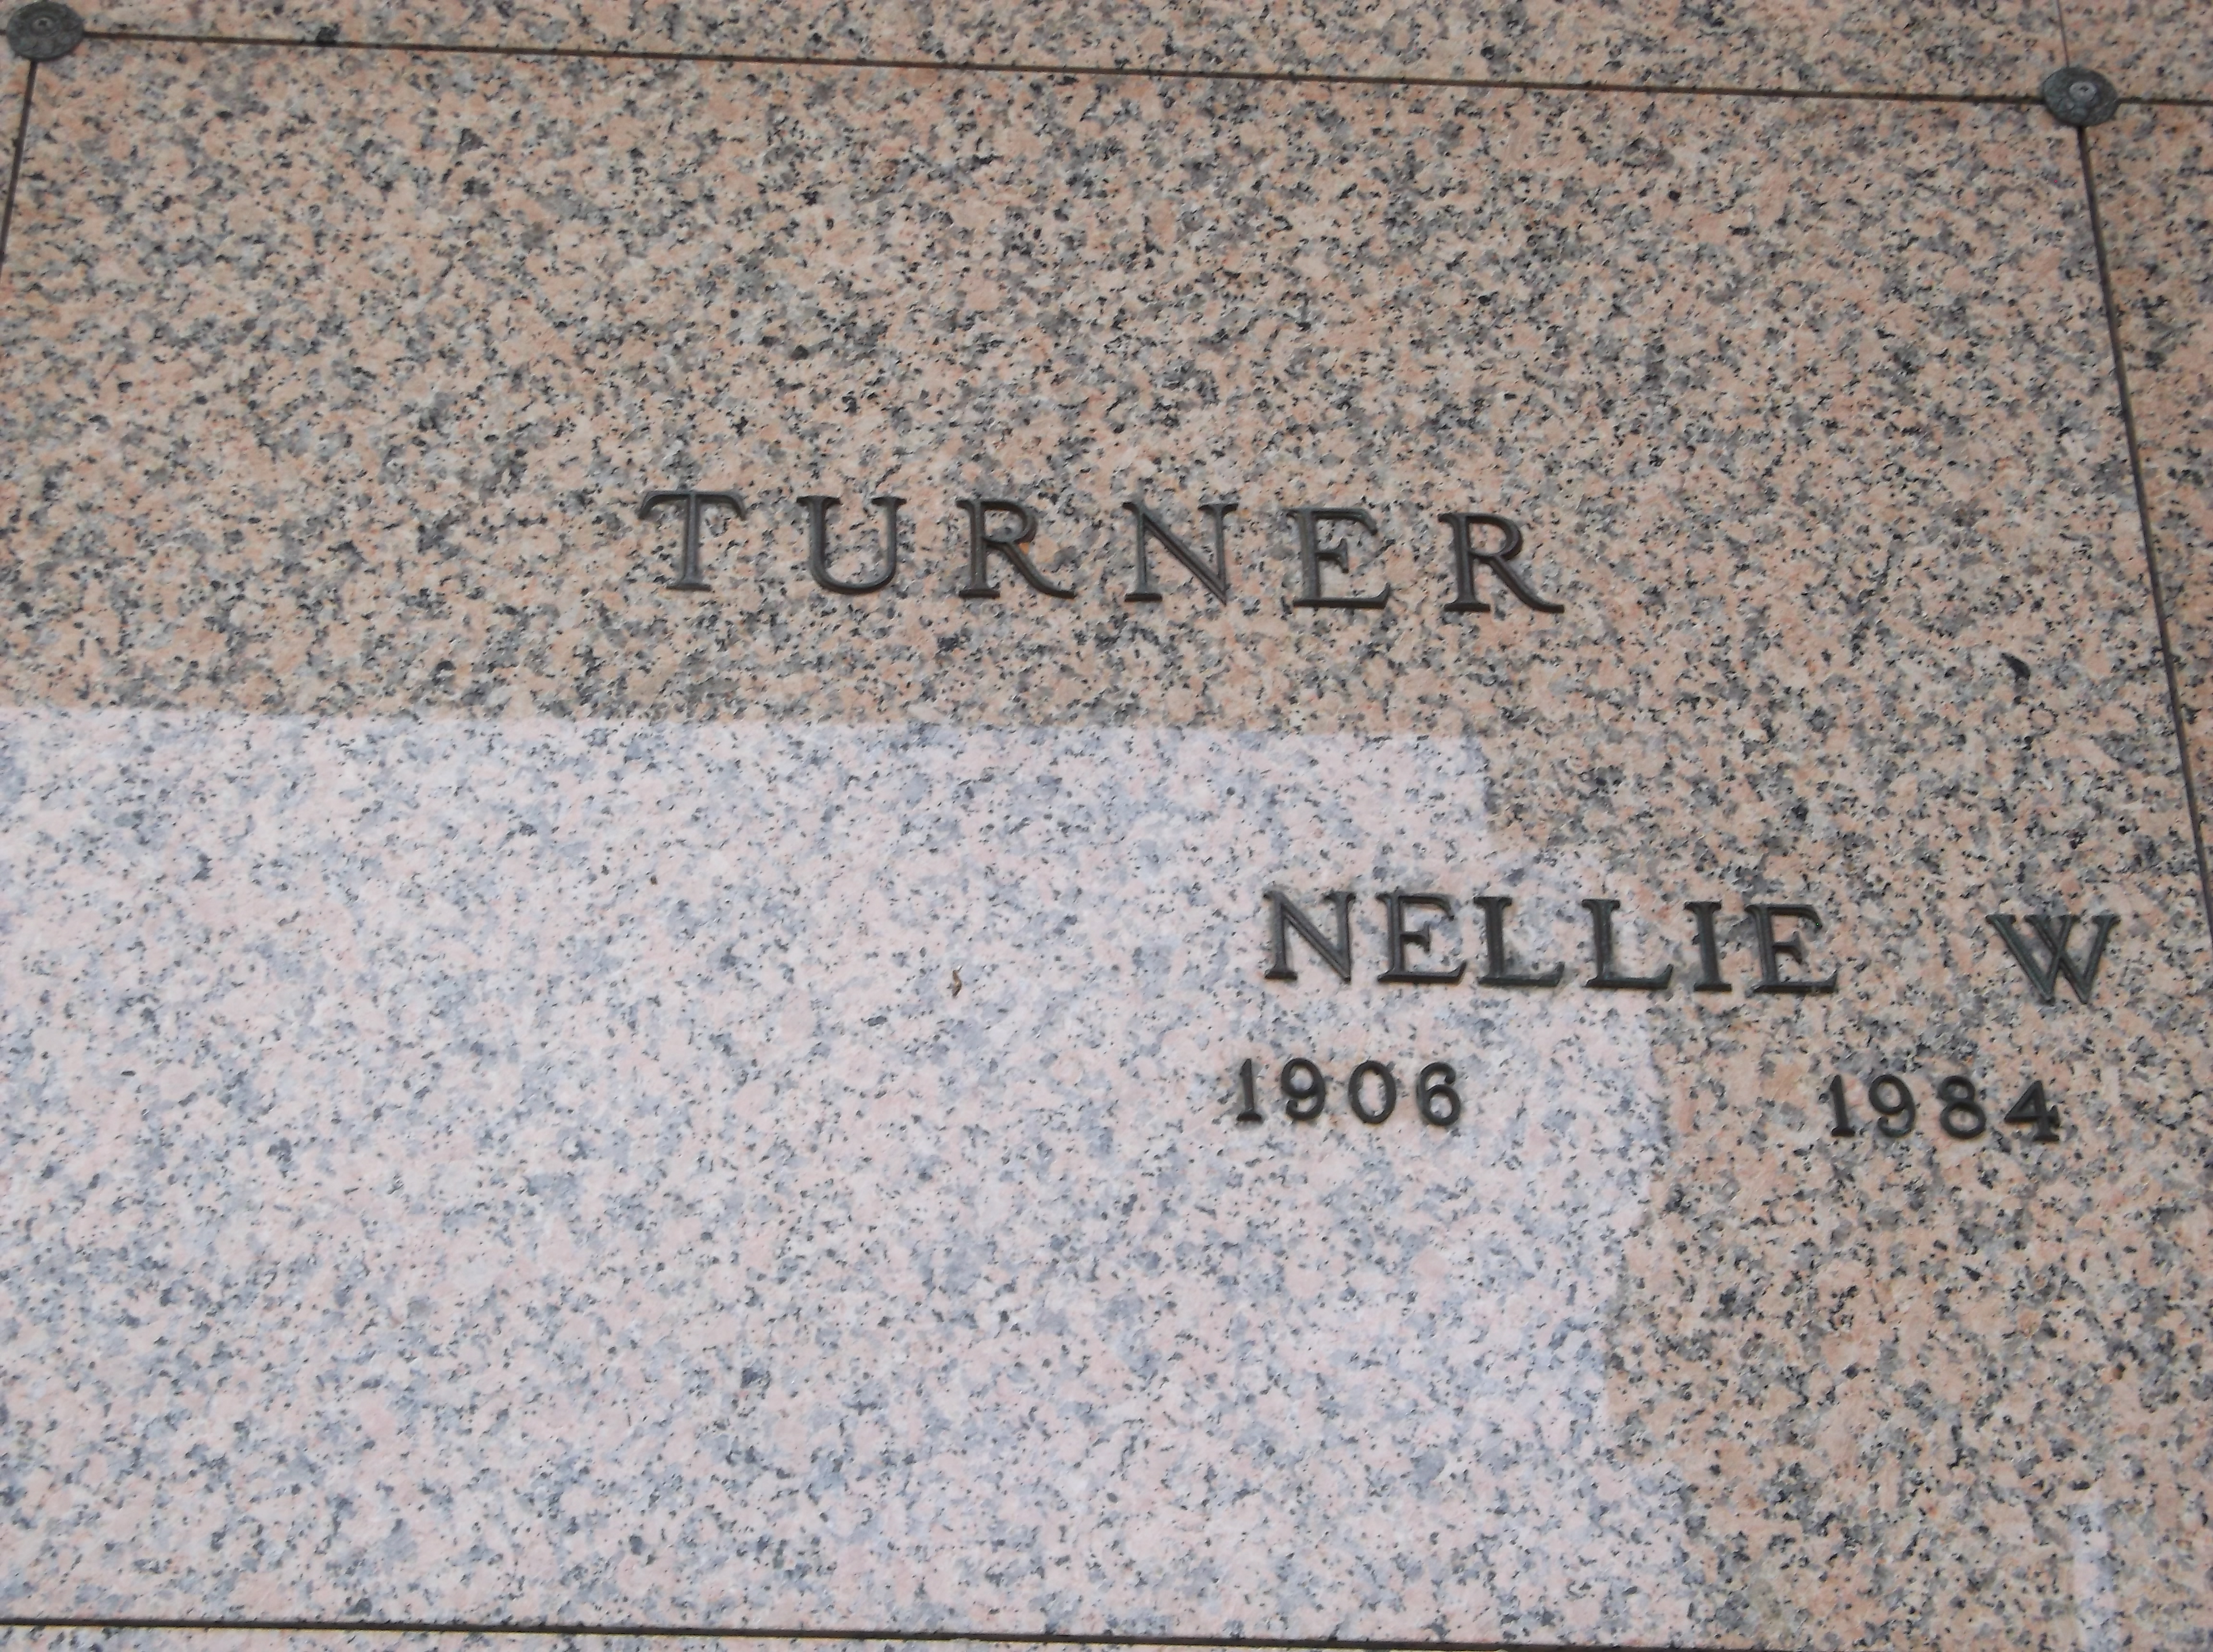 Nellie W Turner